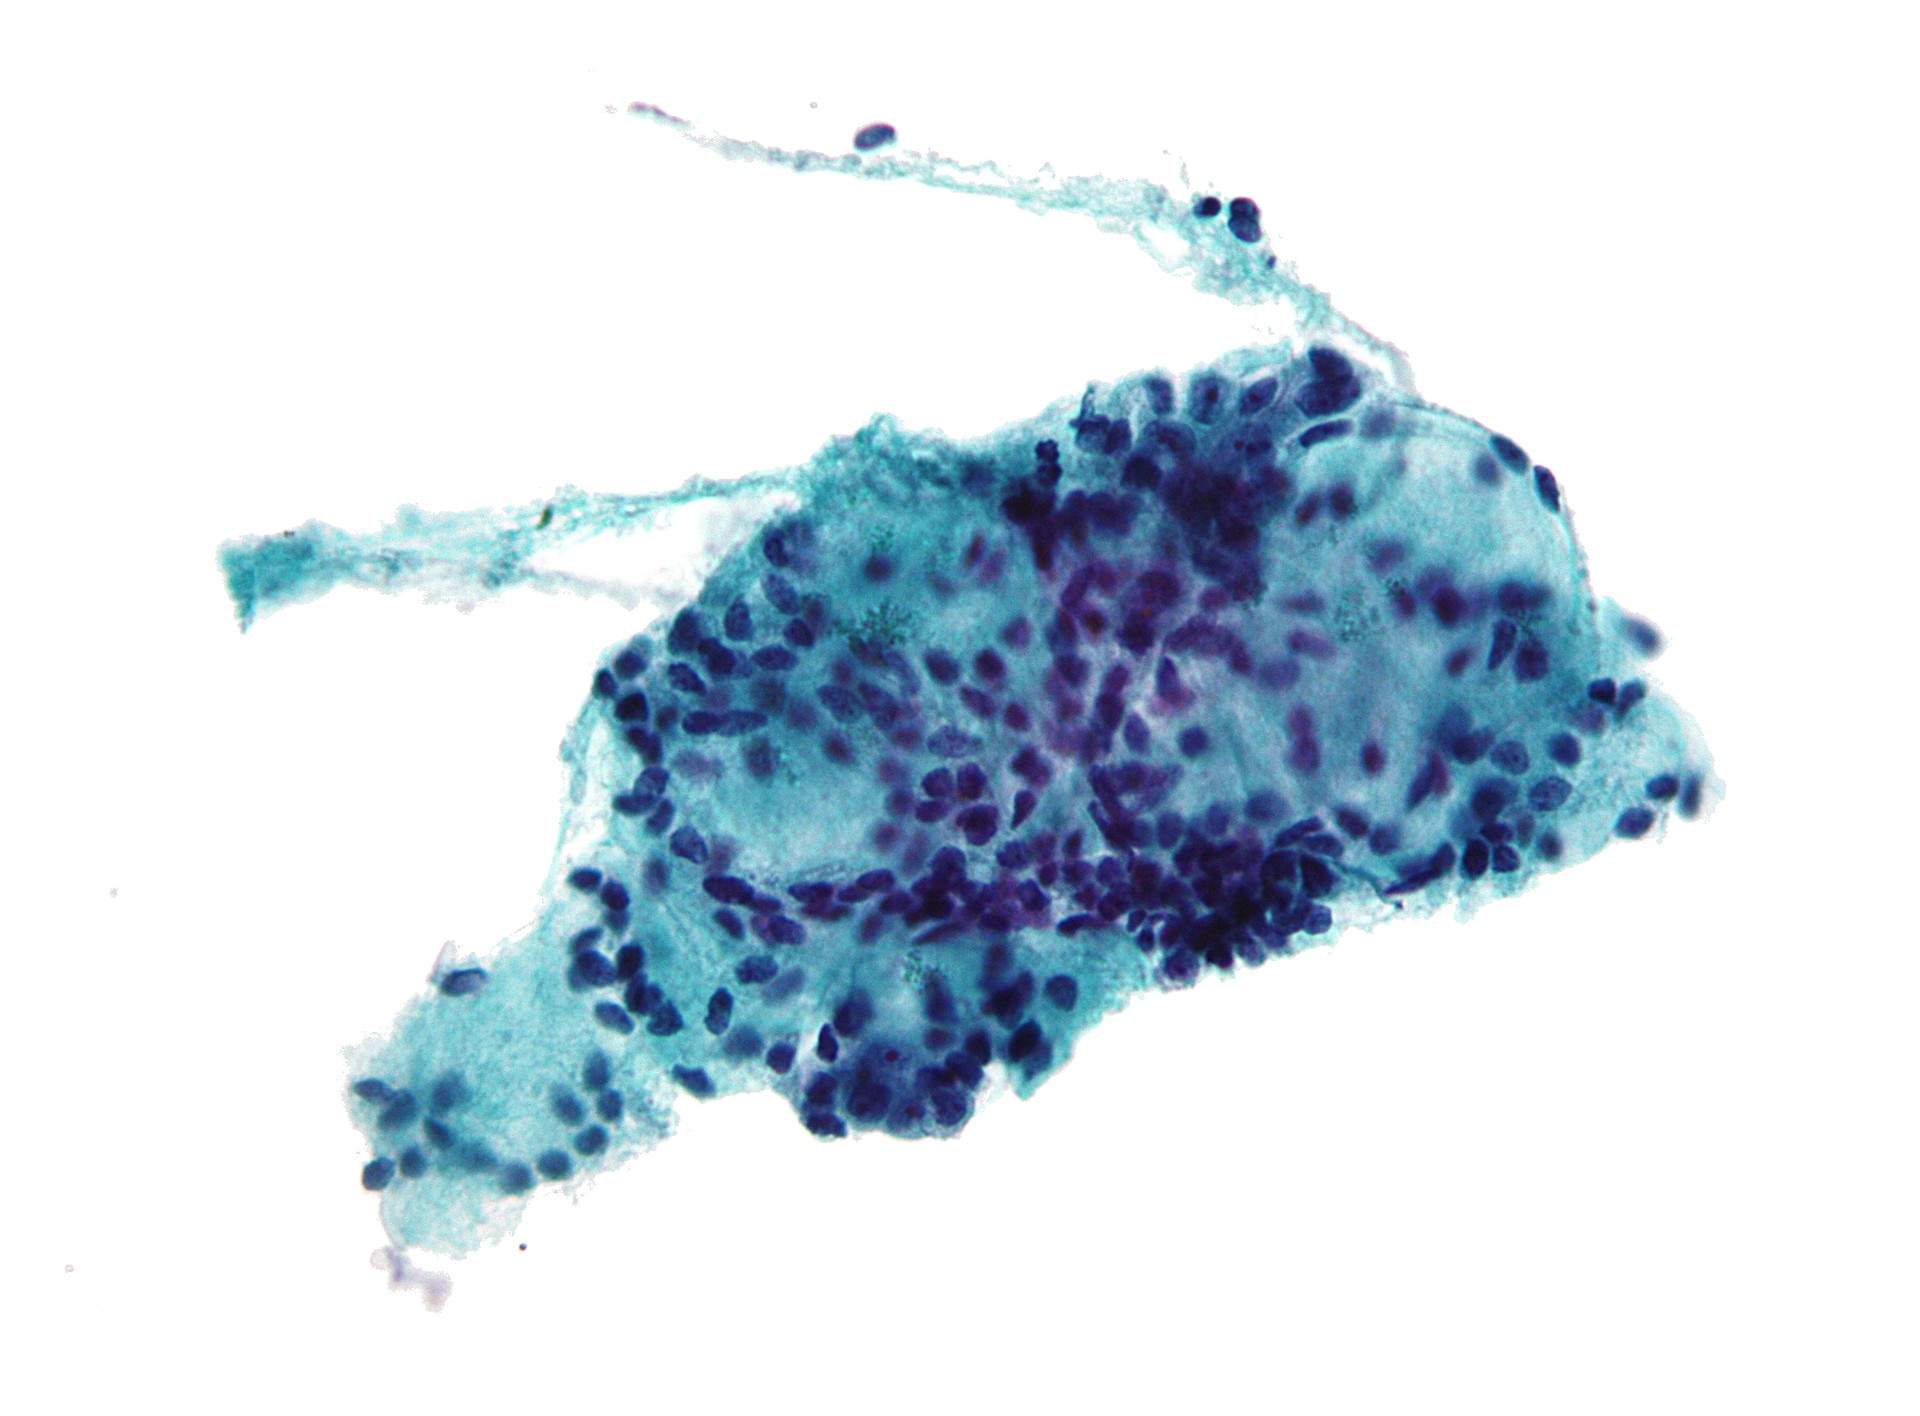 Carcinoma adenoide cístico do pâncreas (Foto: wikimedia commons)